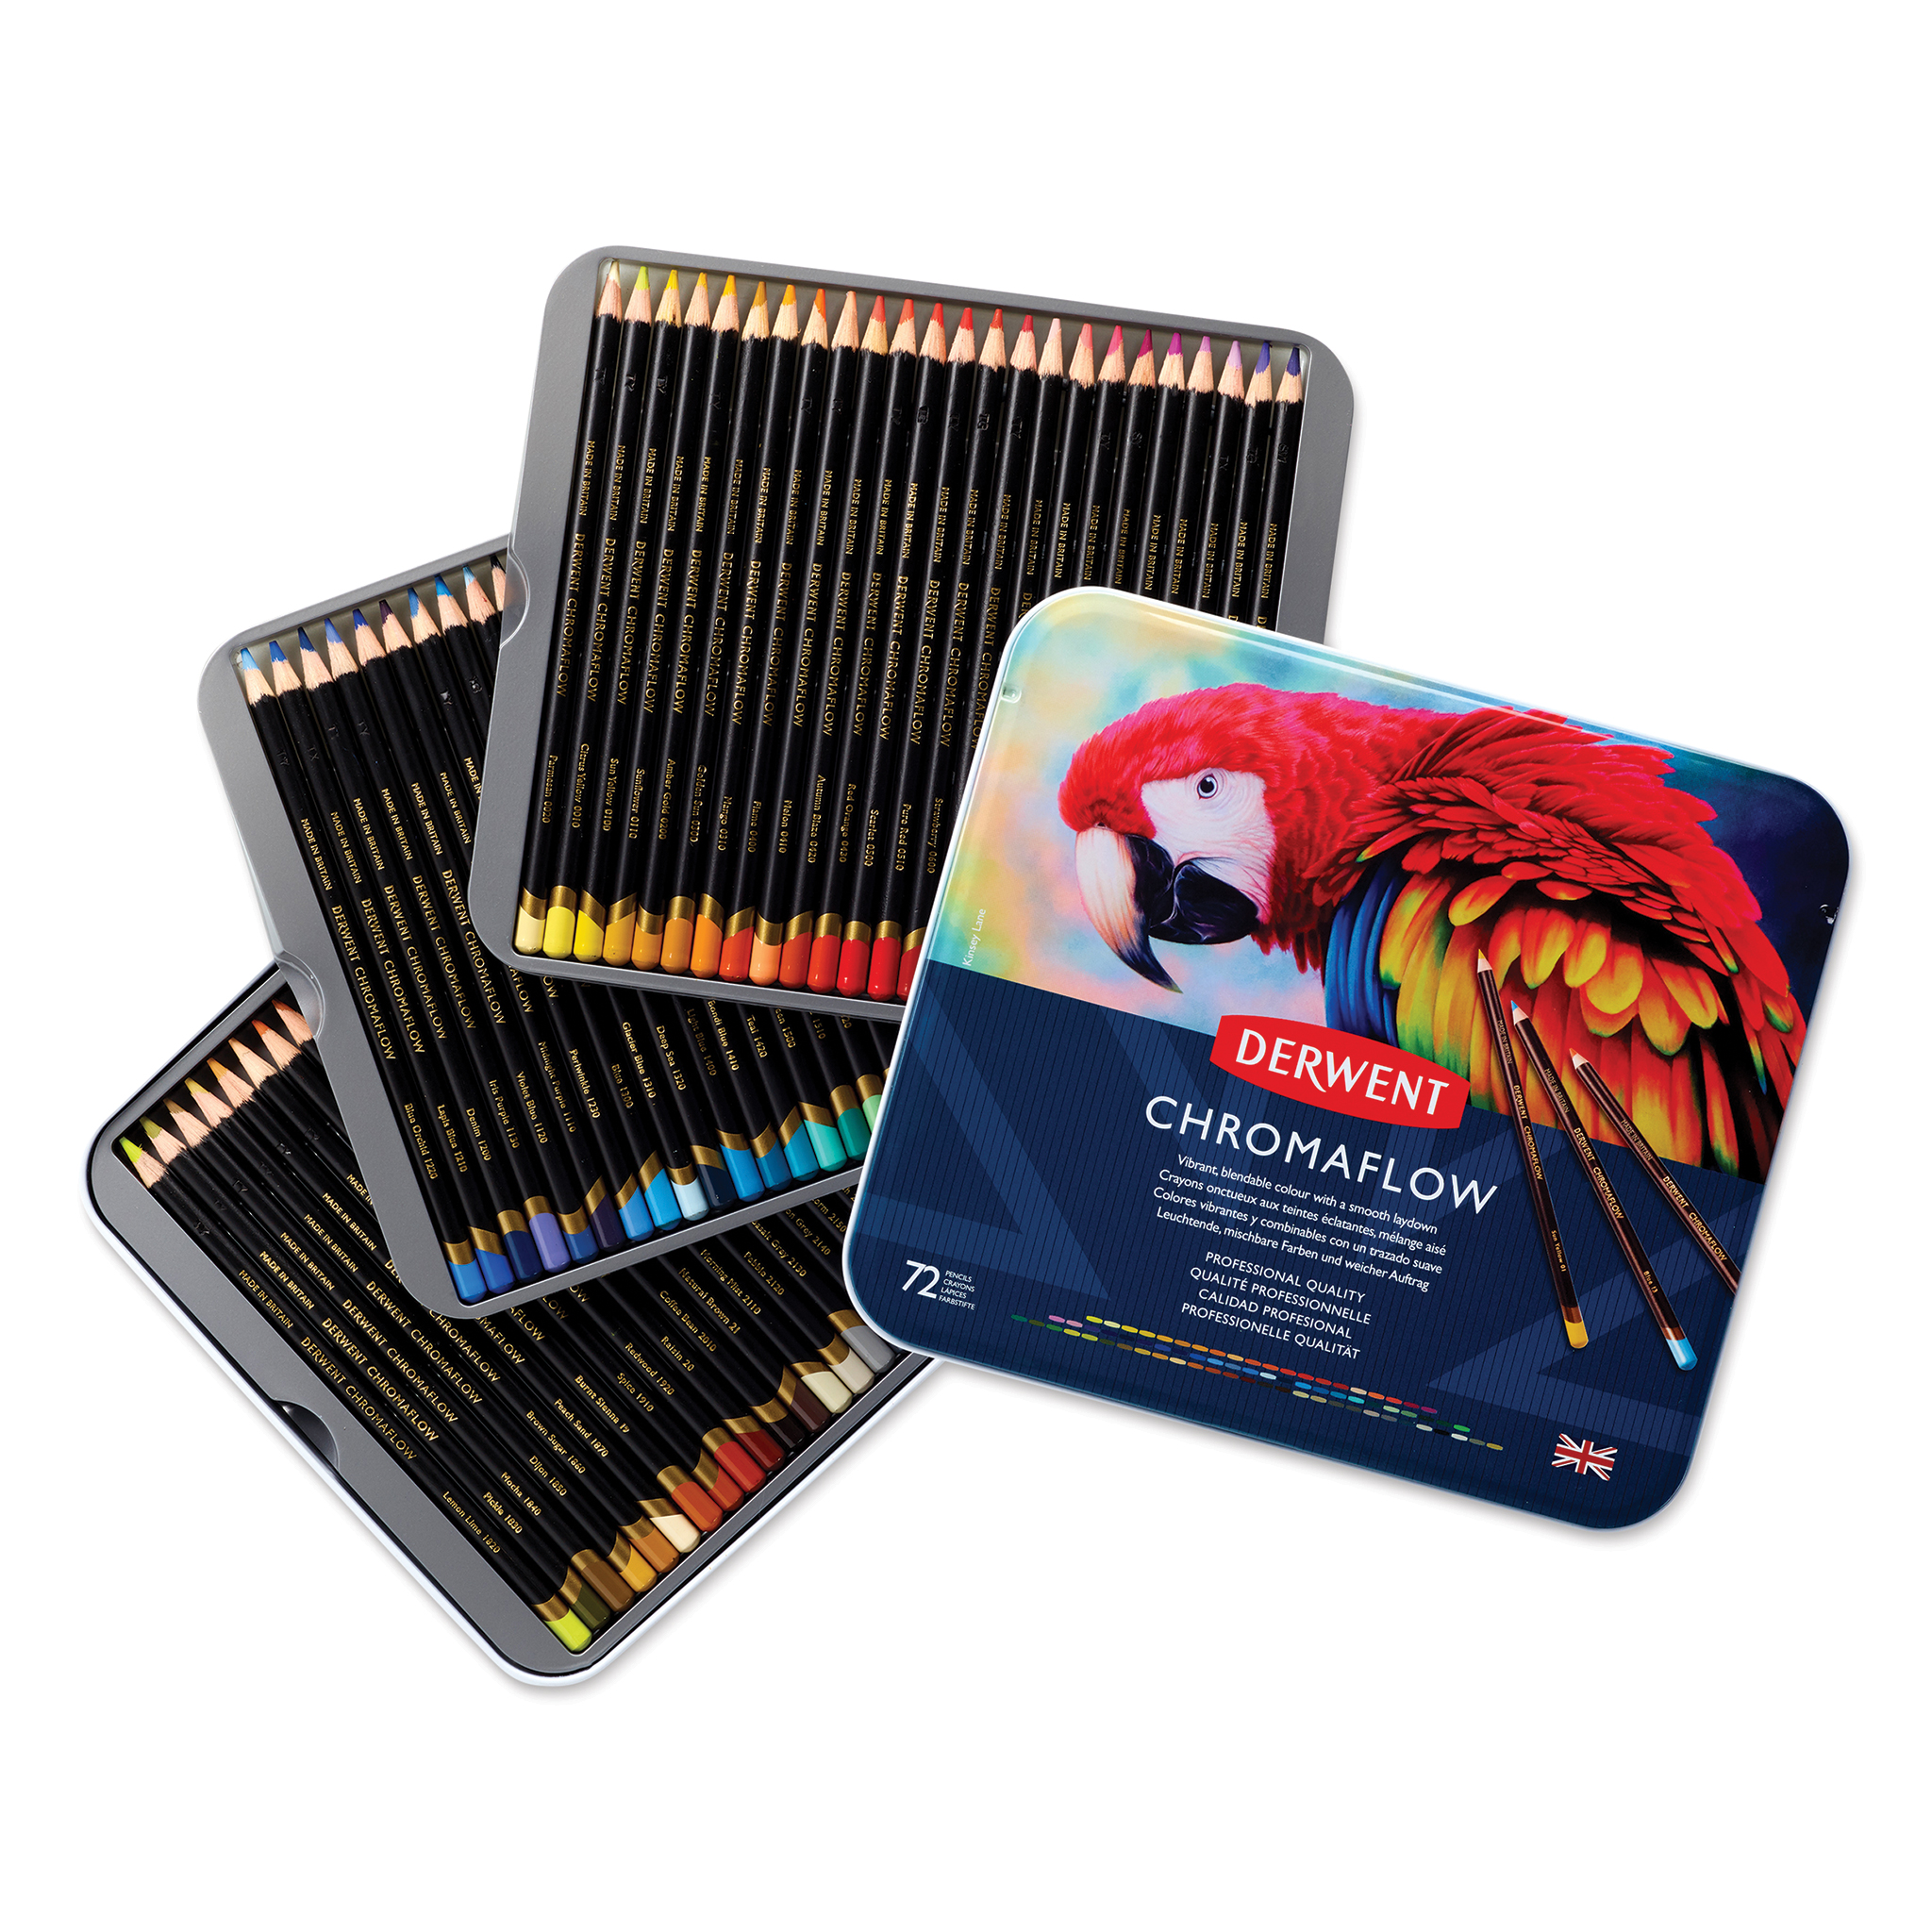 Derwent Chromaflow Colored Pencils - Set of 72 | BLICK Art Materials